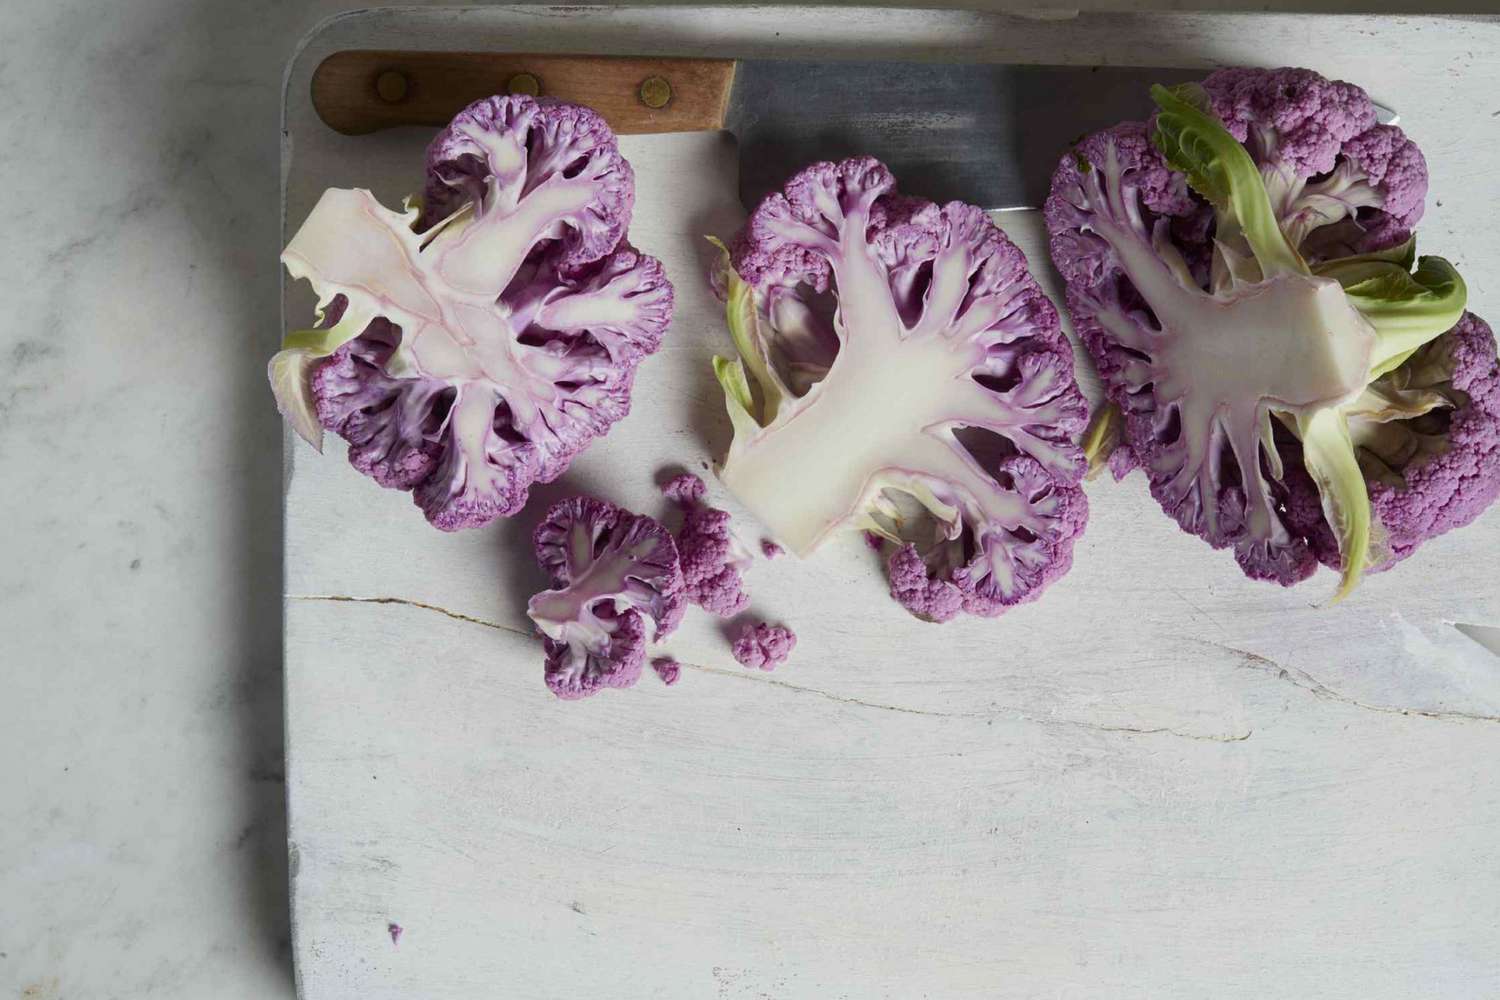 Chunks of purple cauliflower on white cutting board with knife